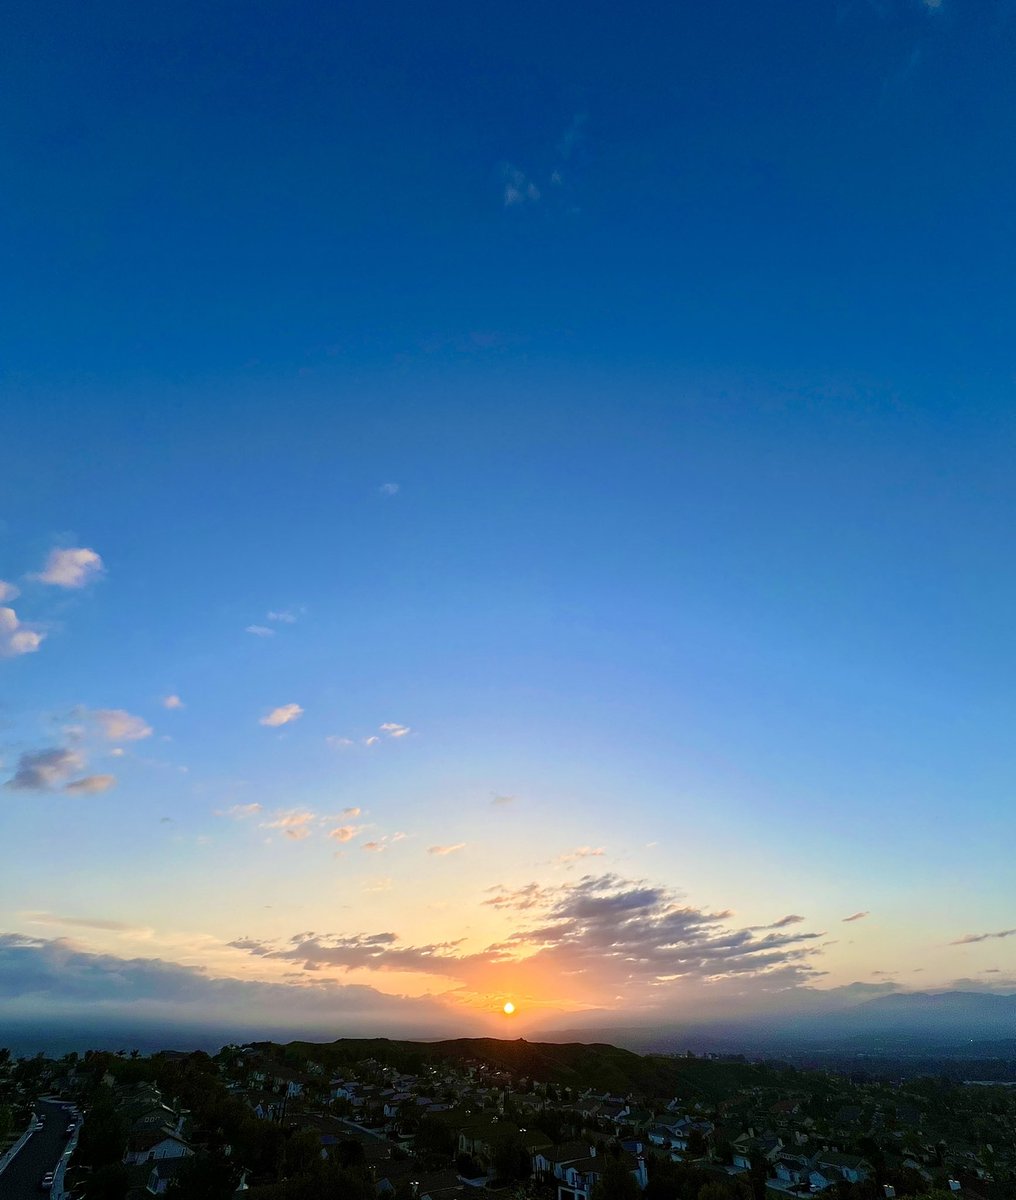 Good Morning From #SoCal!🌞 
#FridayMorning #Sunrise  #SunrisePhotography #Spring #Sky #SkyPhotography #April #TGIF